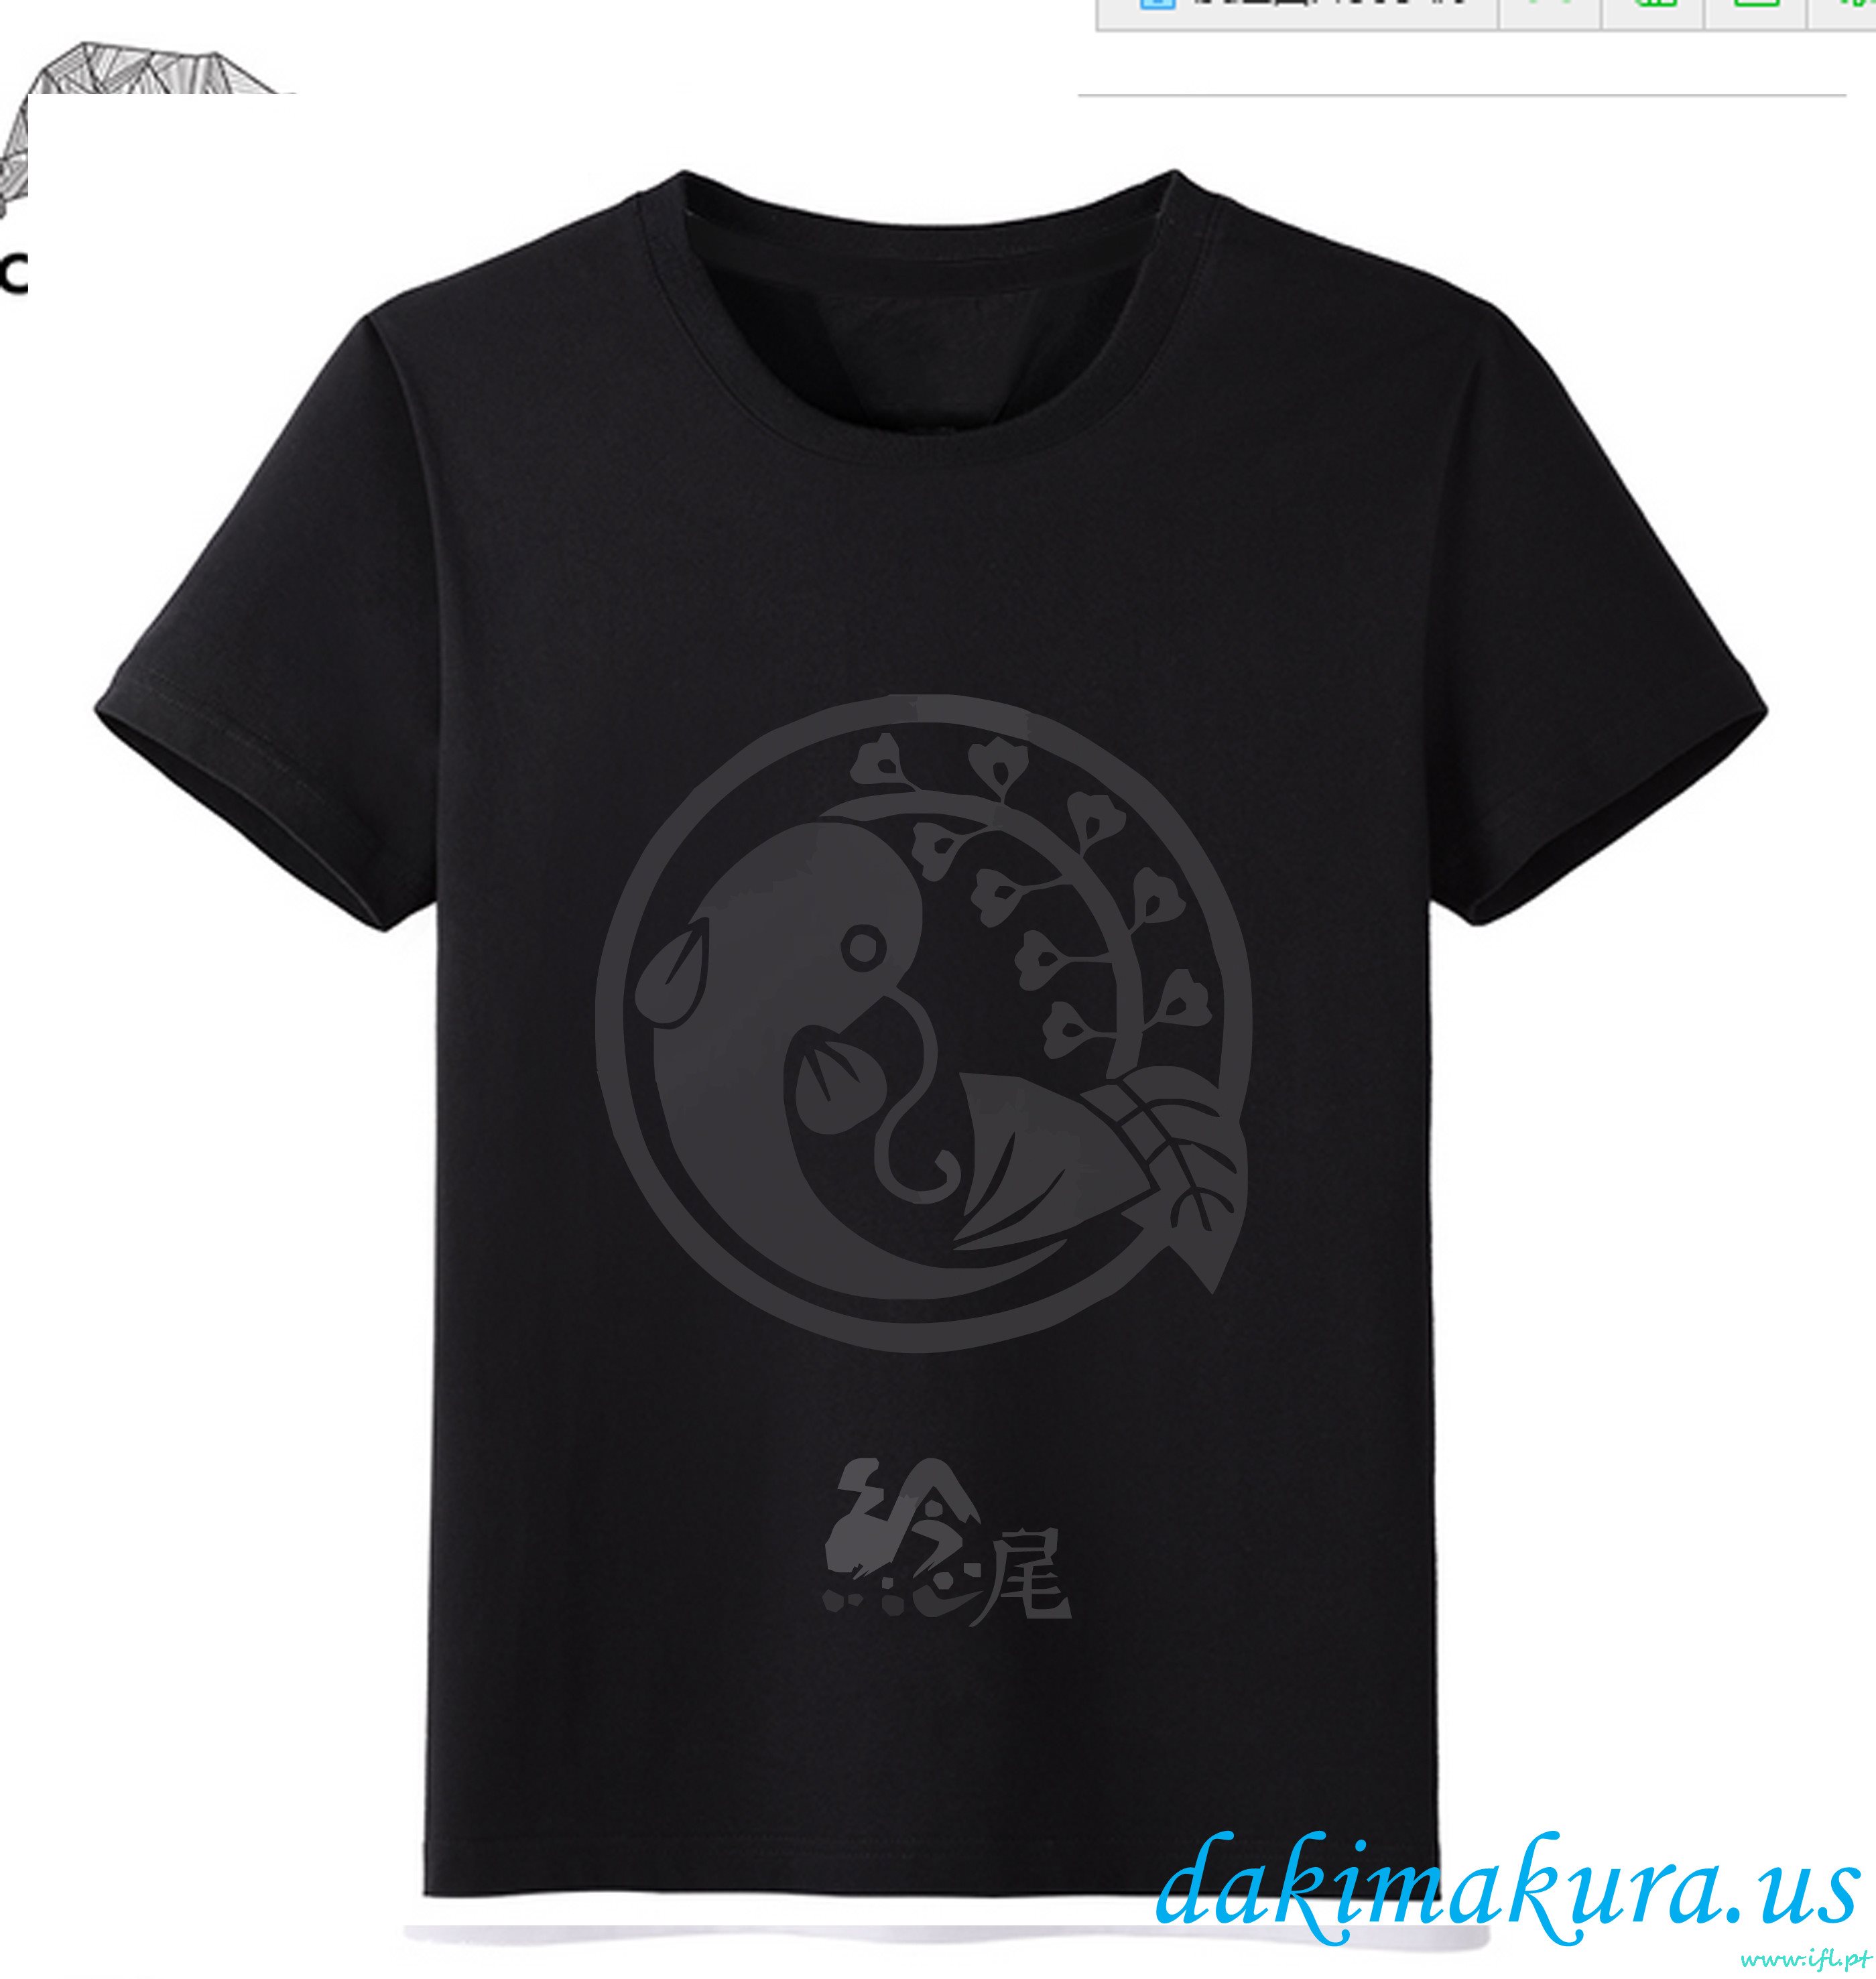 Billig Schwarz - Touken Ranbu Online Männer Anime Mode T-Shirts Aus China-Fabrik